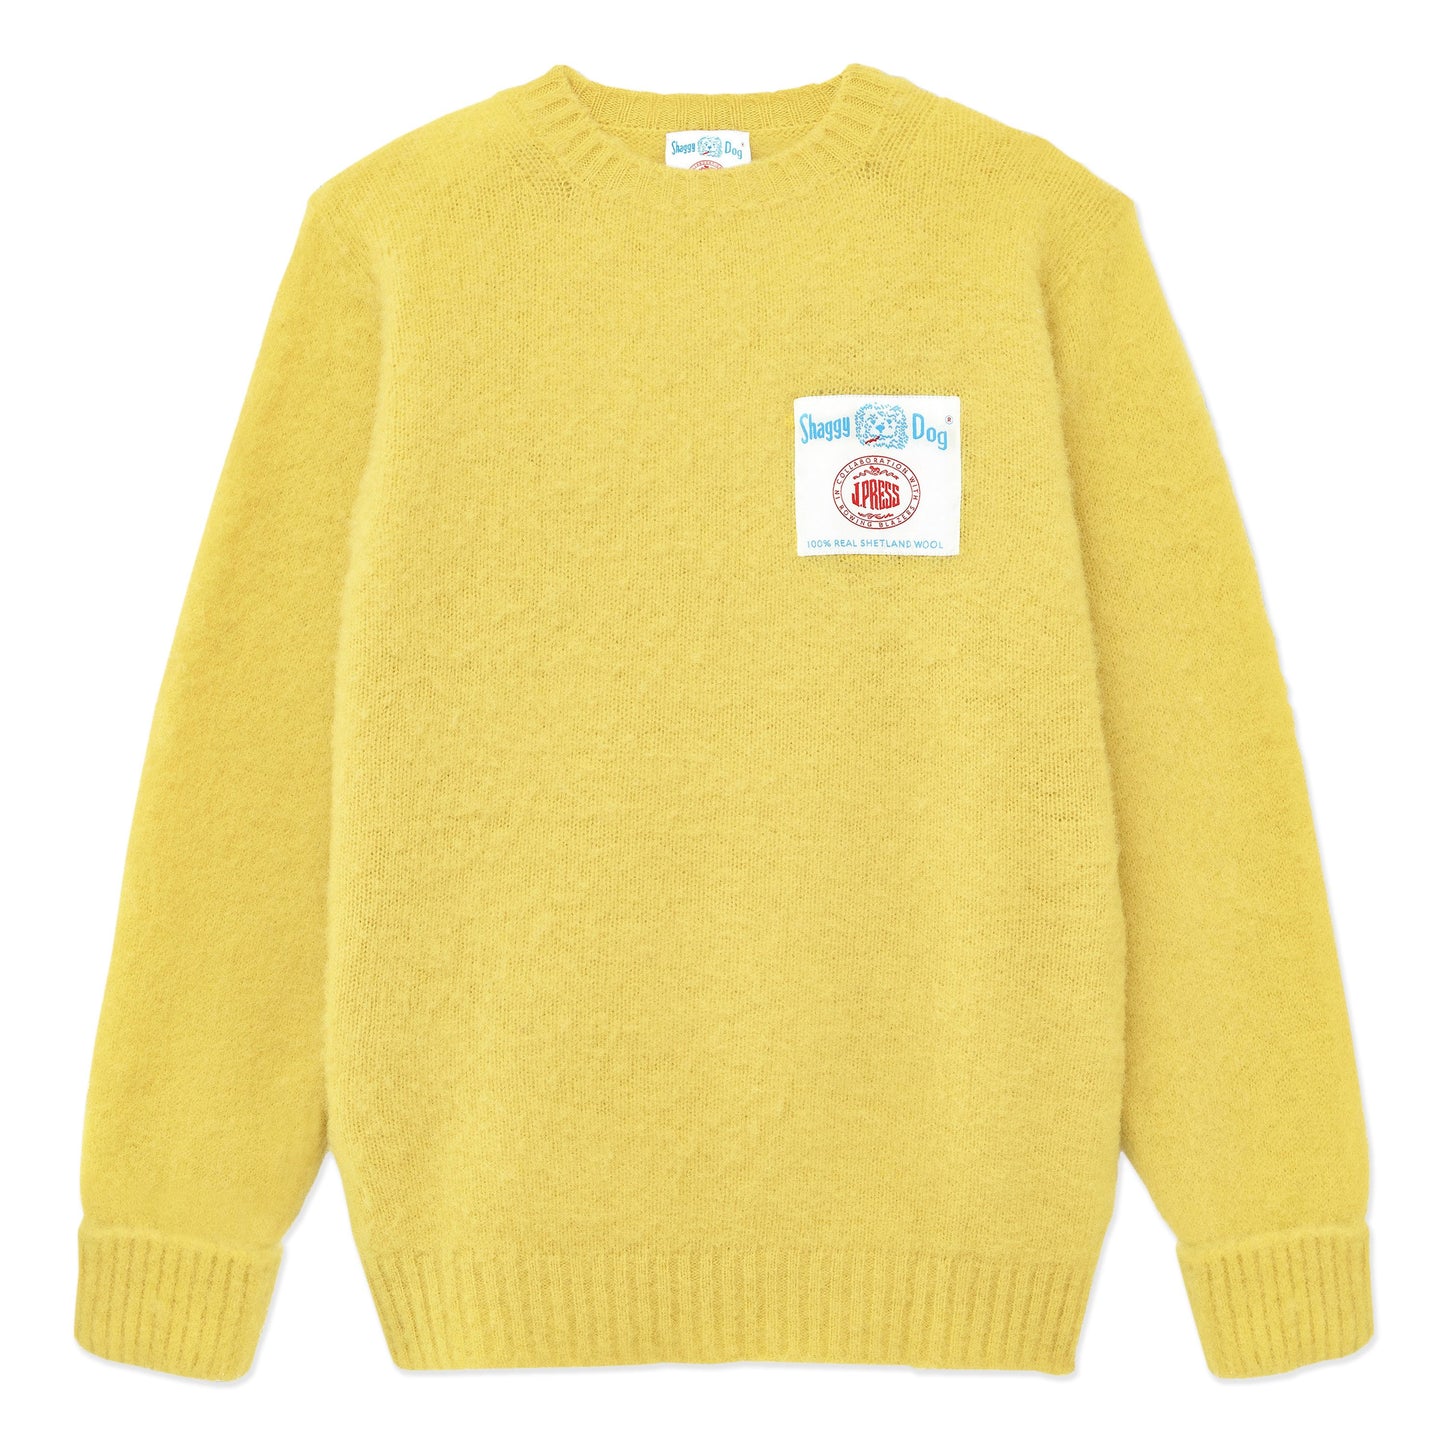 Shaggy Dog Sweater (Yellow)- JPress X Rowing Blazers